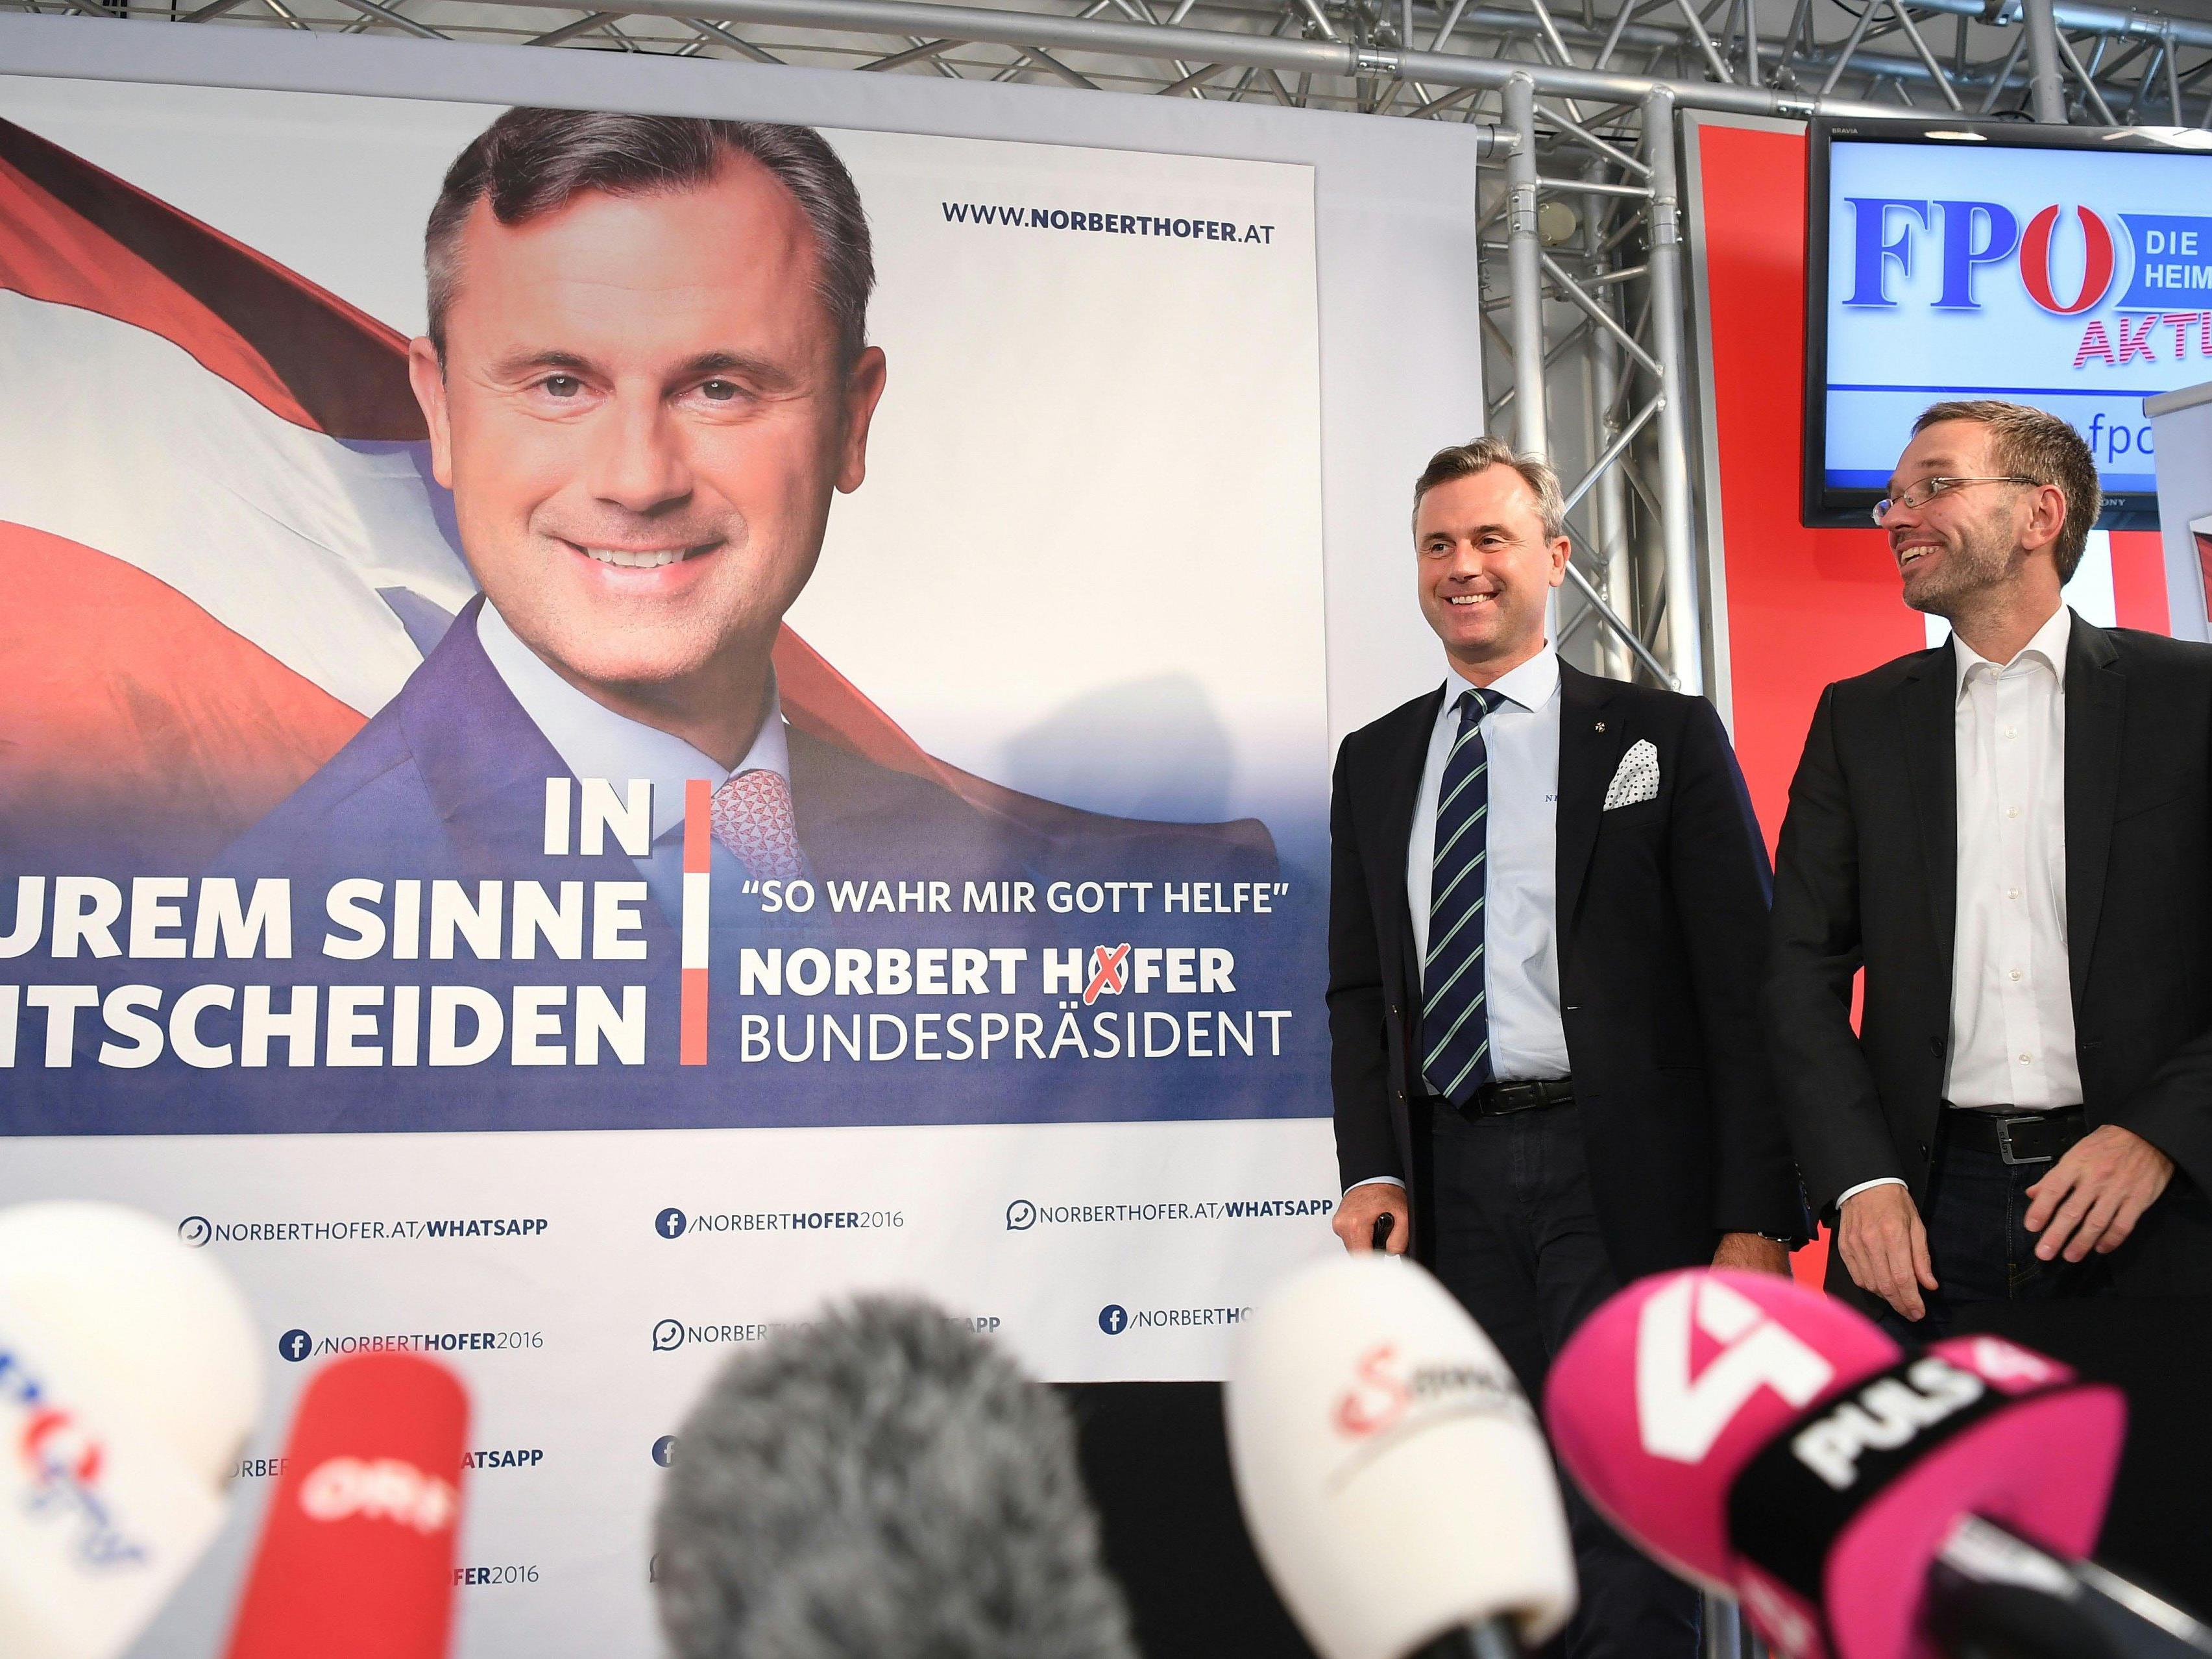 Norbert Hofers Wahlplakate sind umstritten.